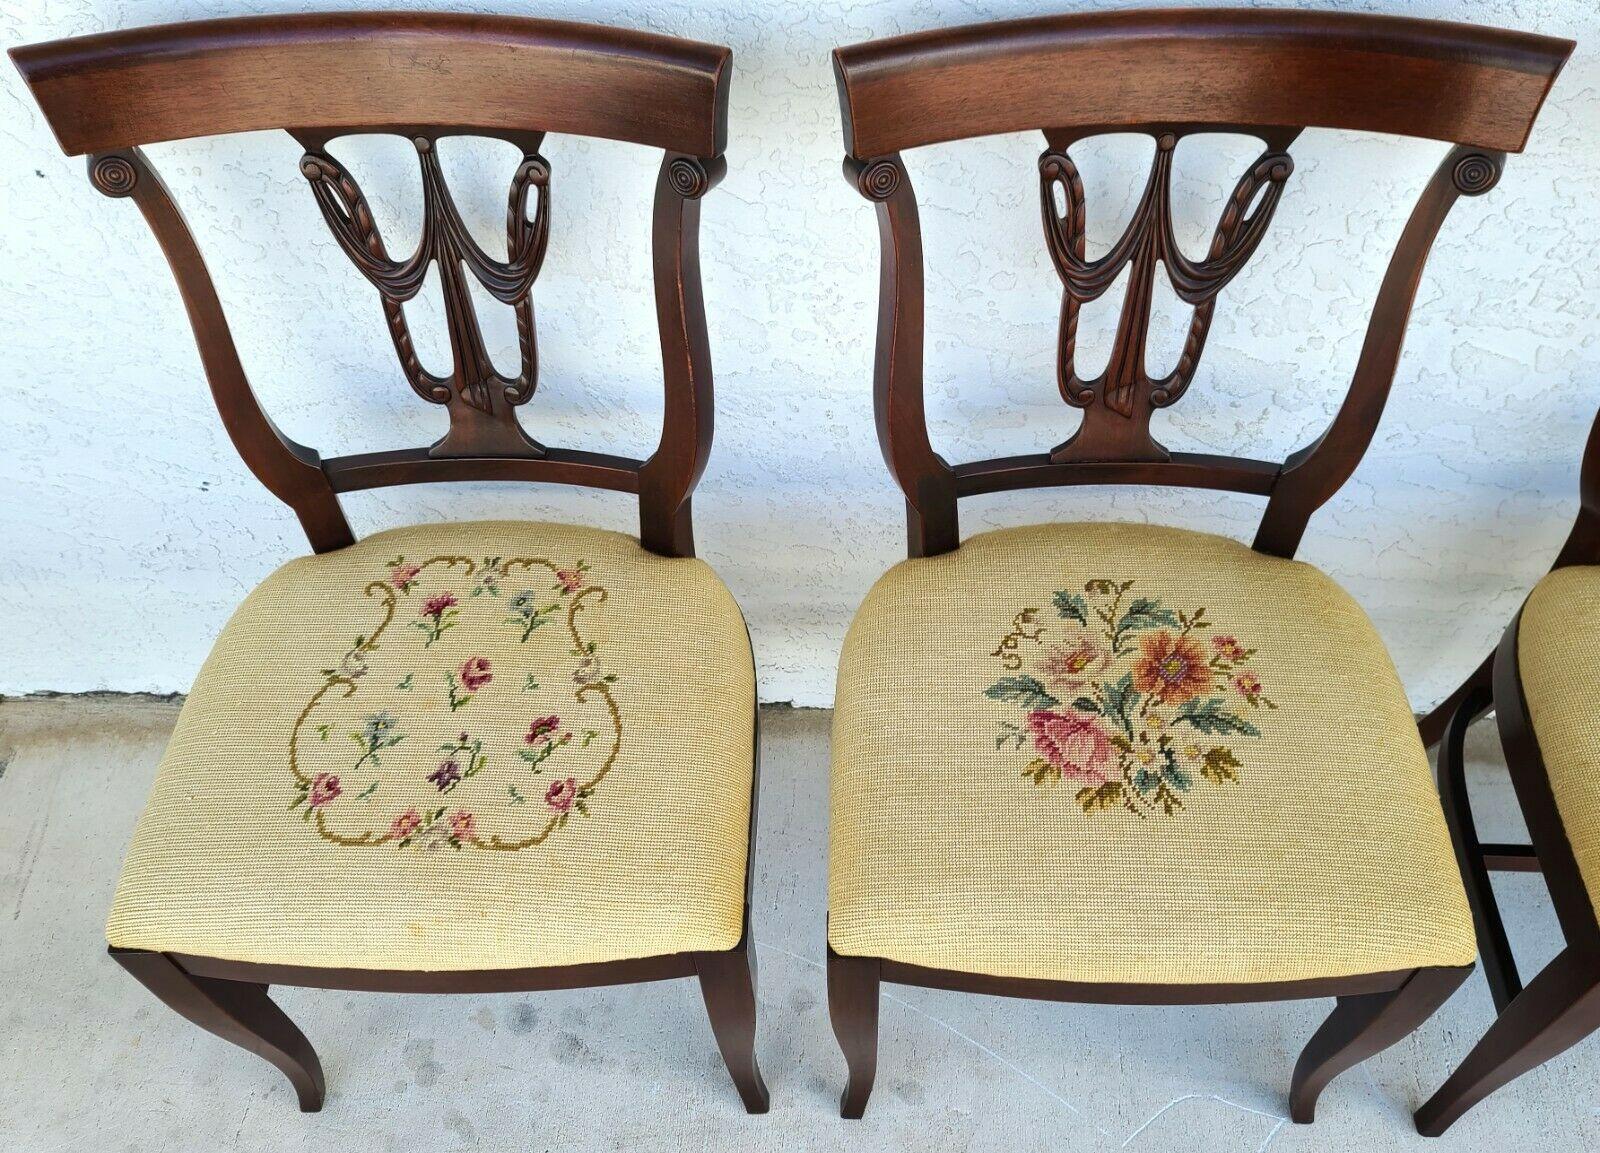 Antique 1920s Italian Regency Mahogany Dining Chairs with Needlepoint -Set of 6 2